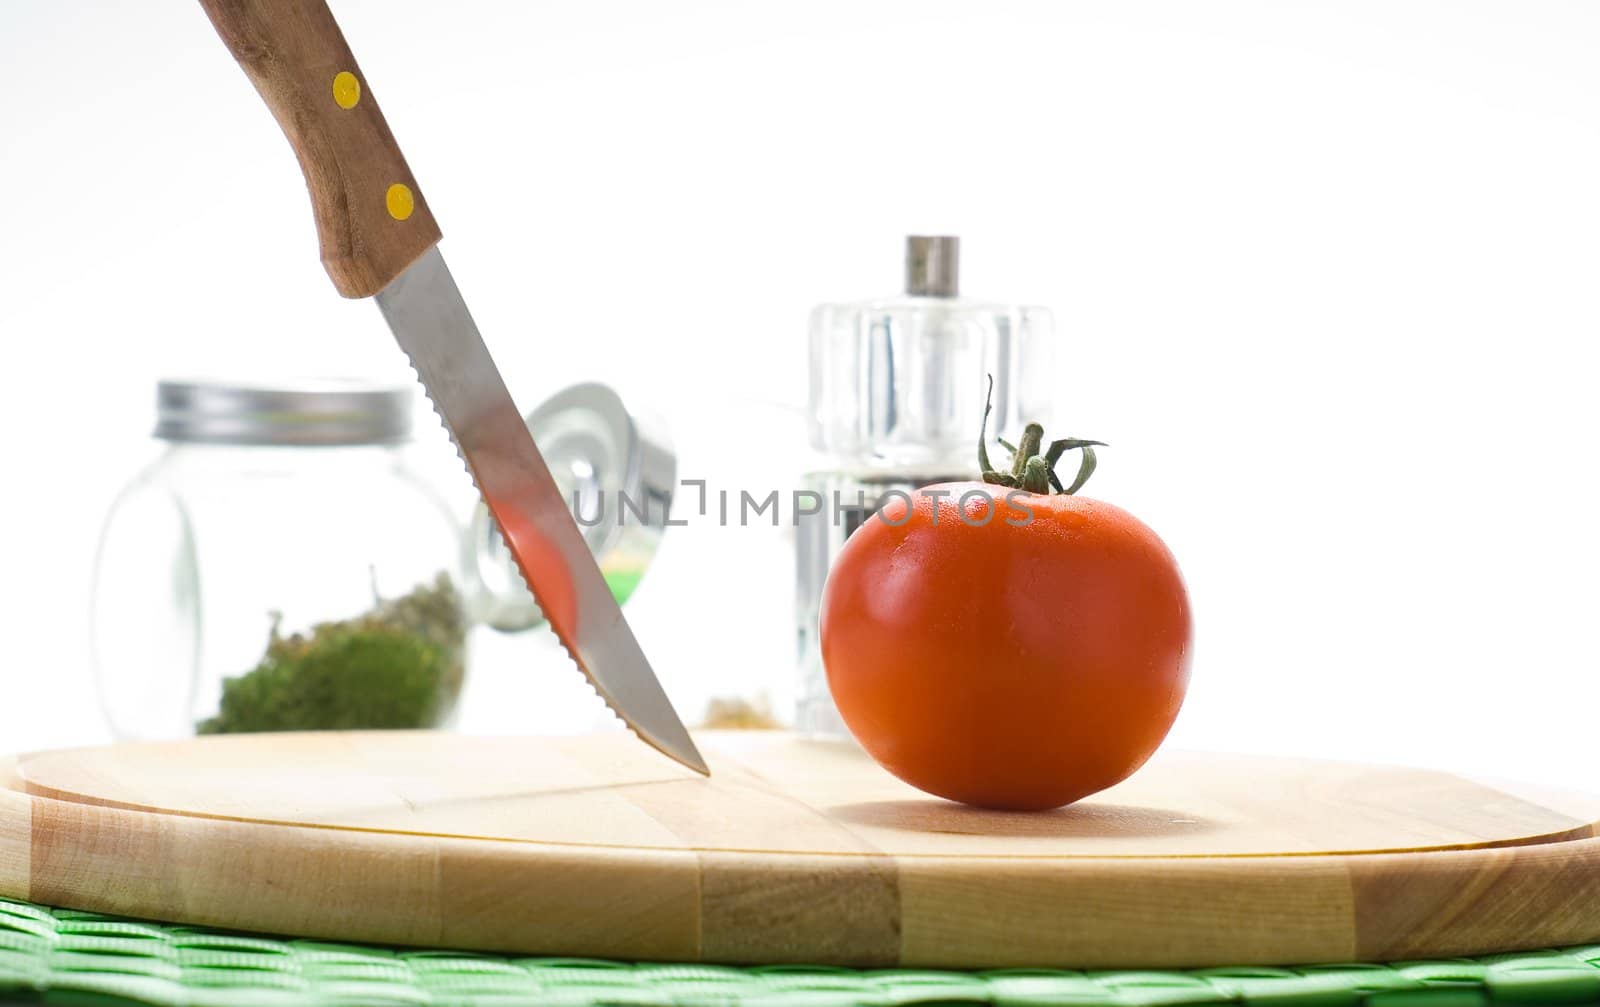 Tomato by Vladimir